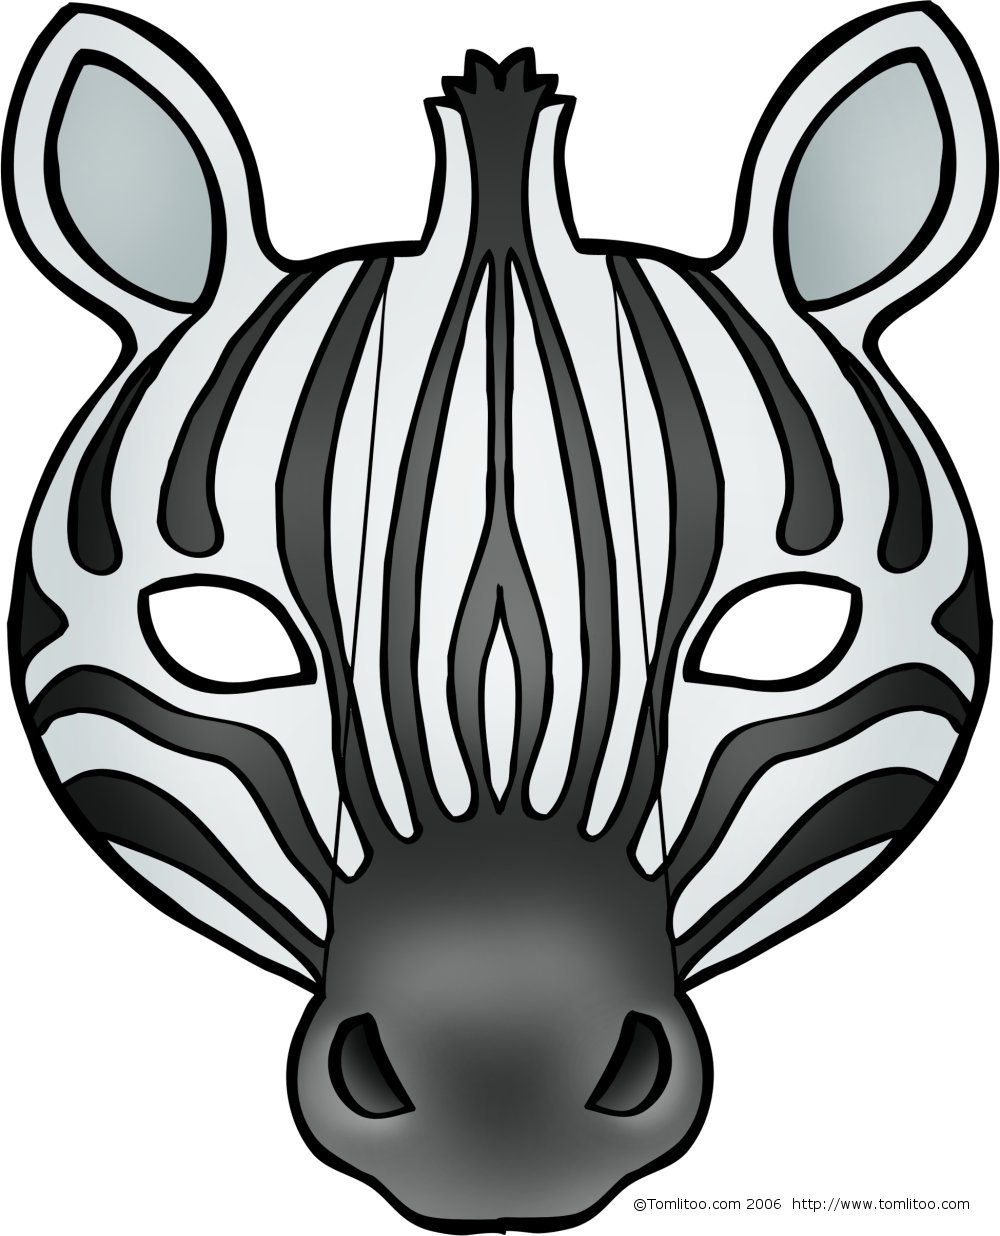 maski i opaski - Zebra.jpg